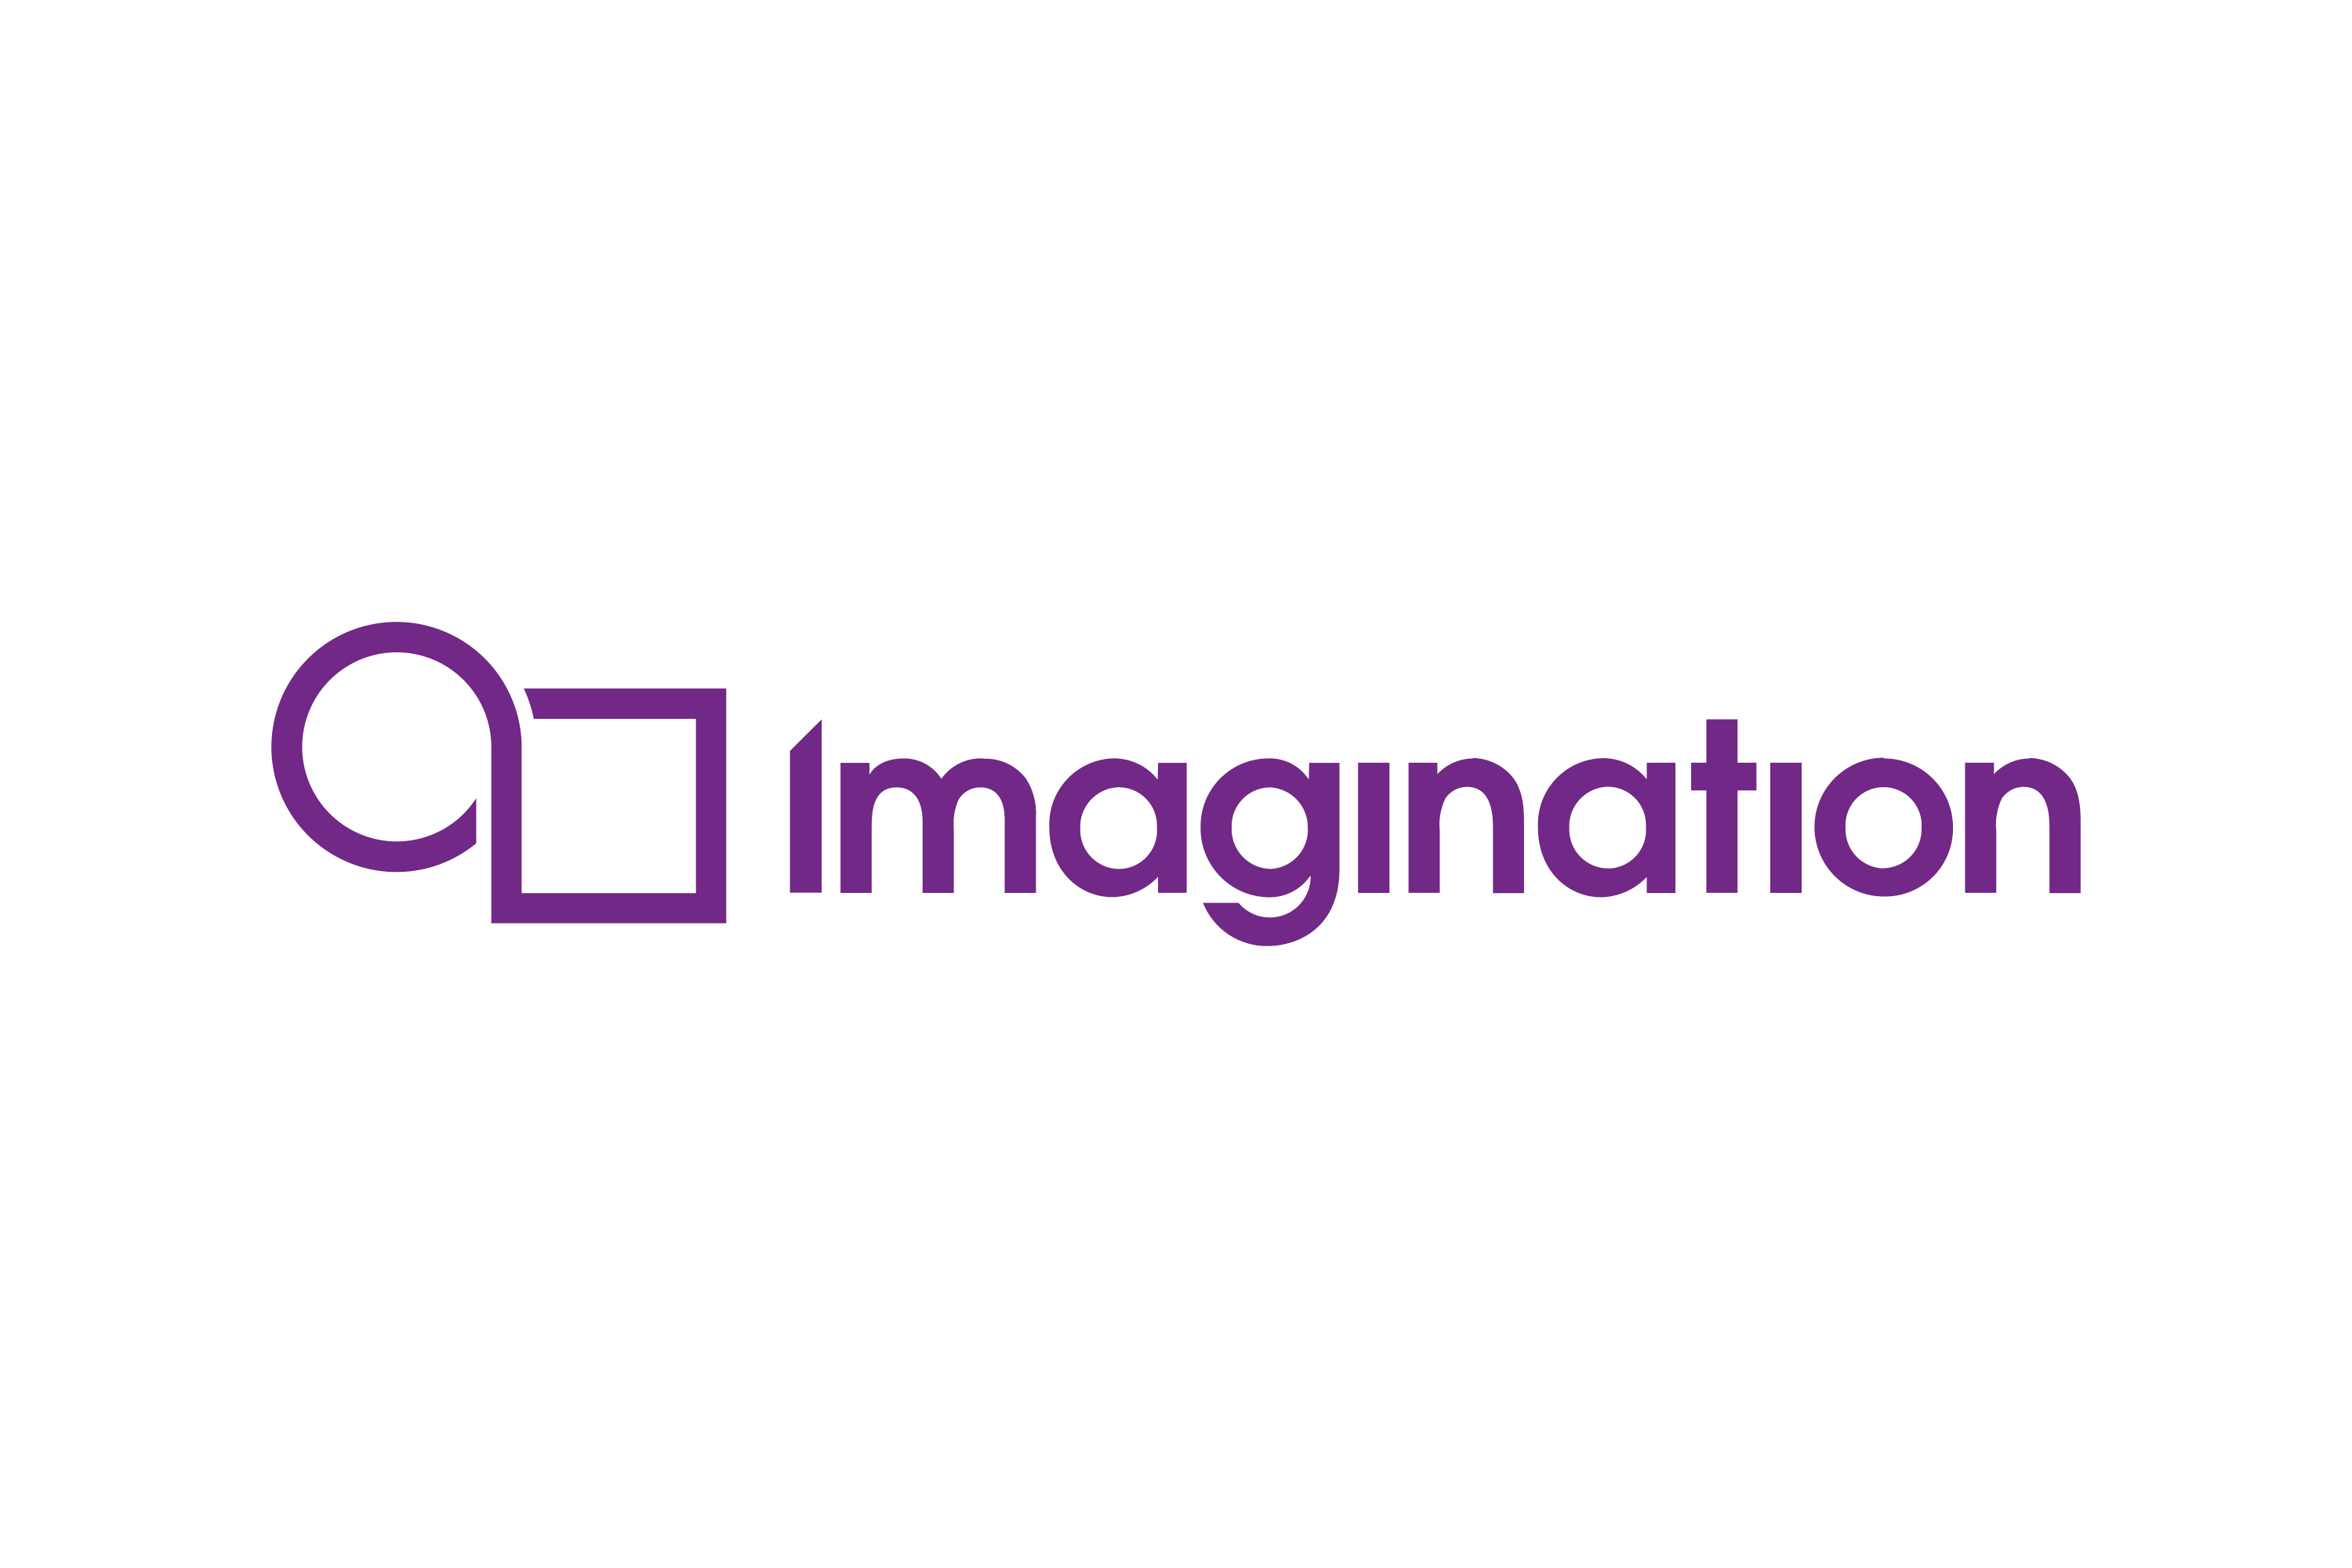 Creative team imagination art logo man Royalty Free Vector